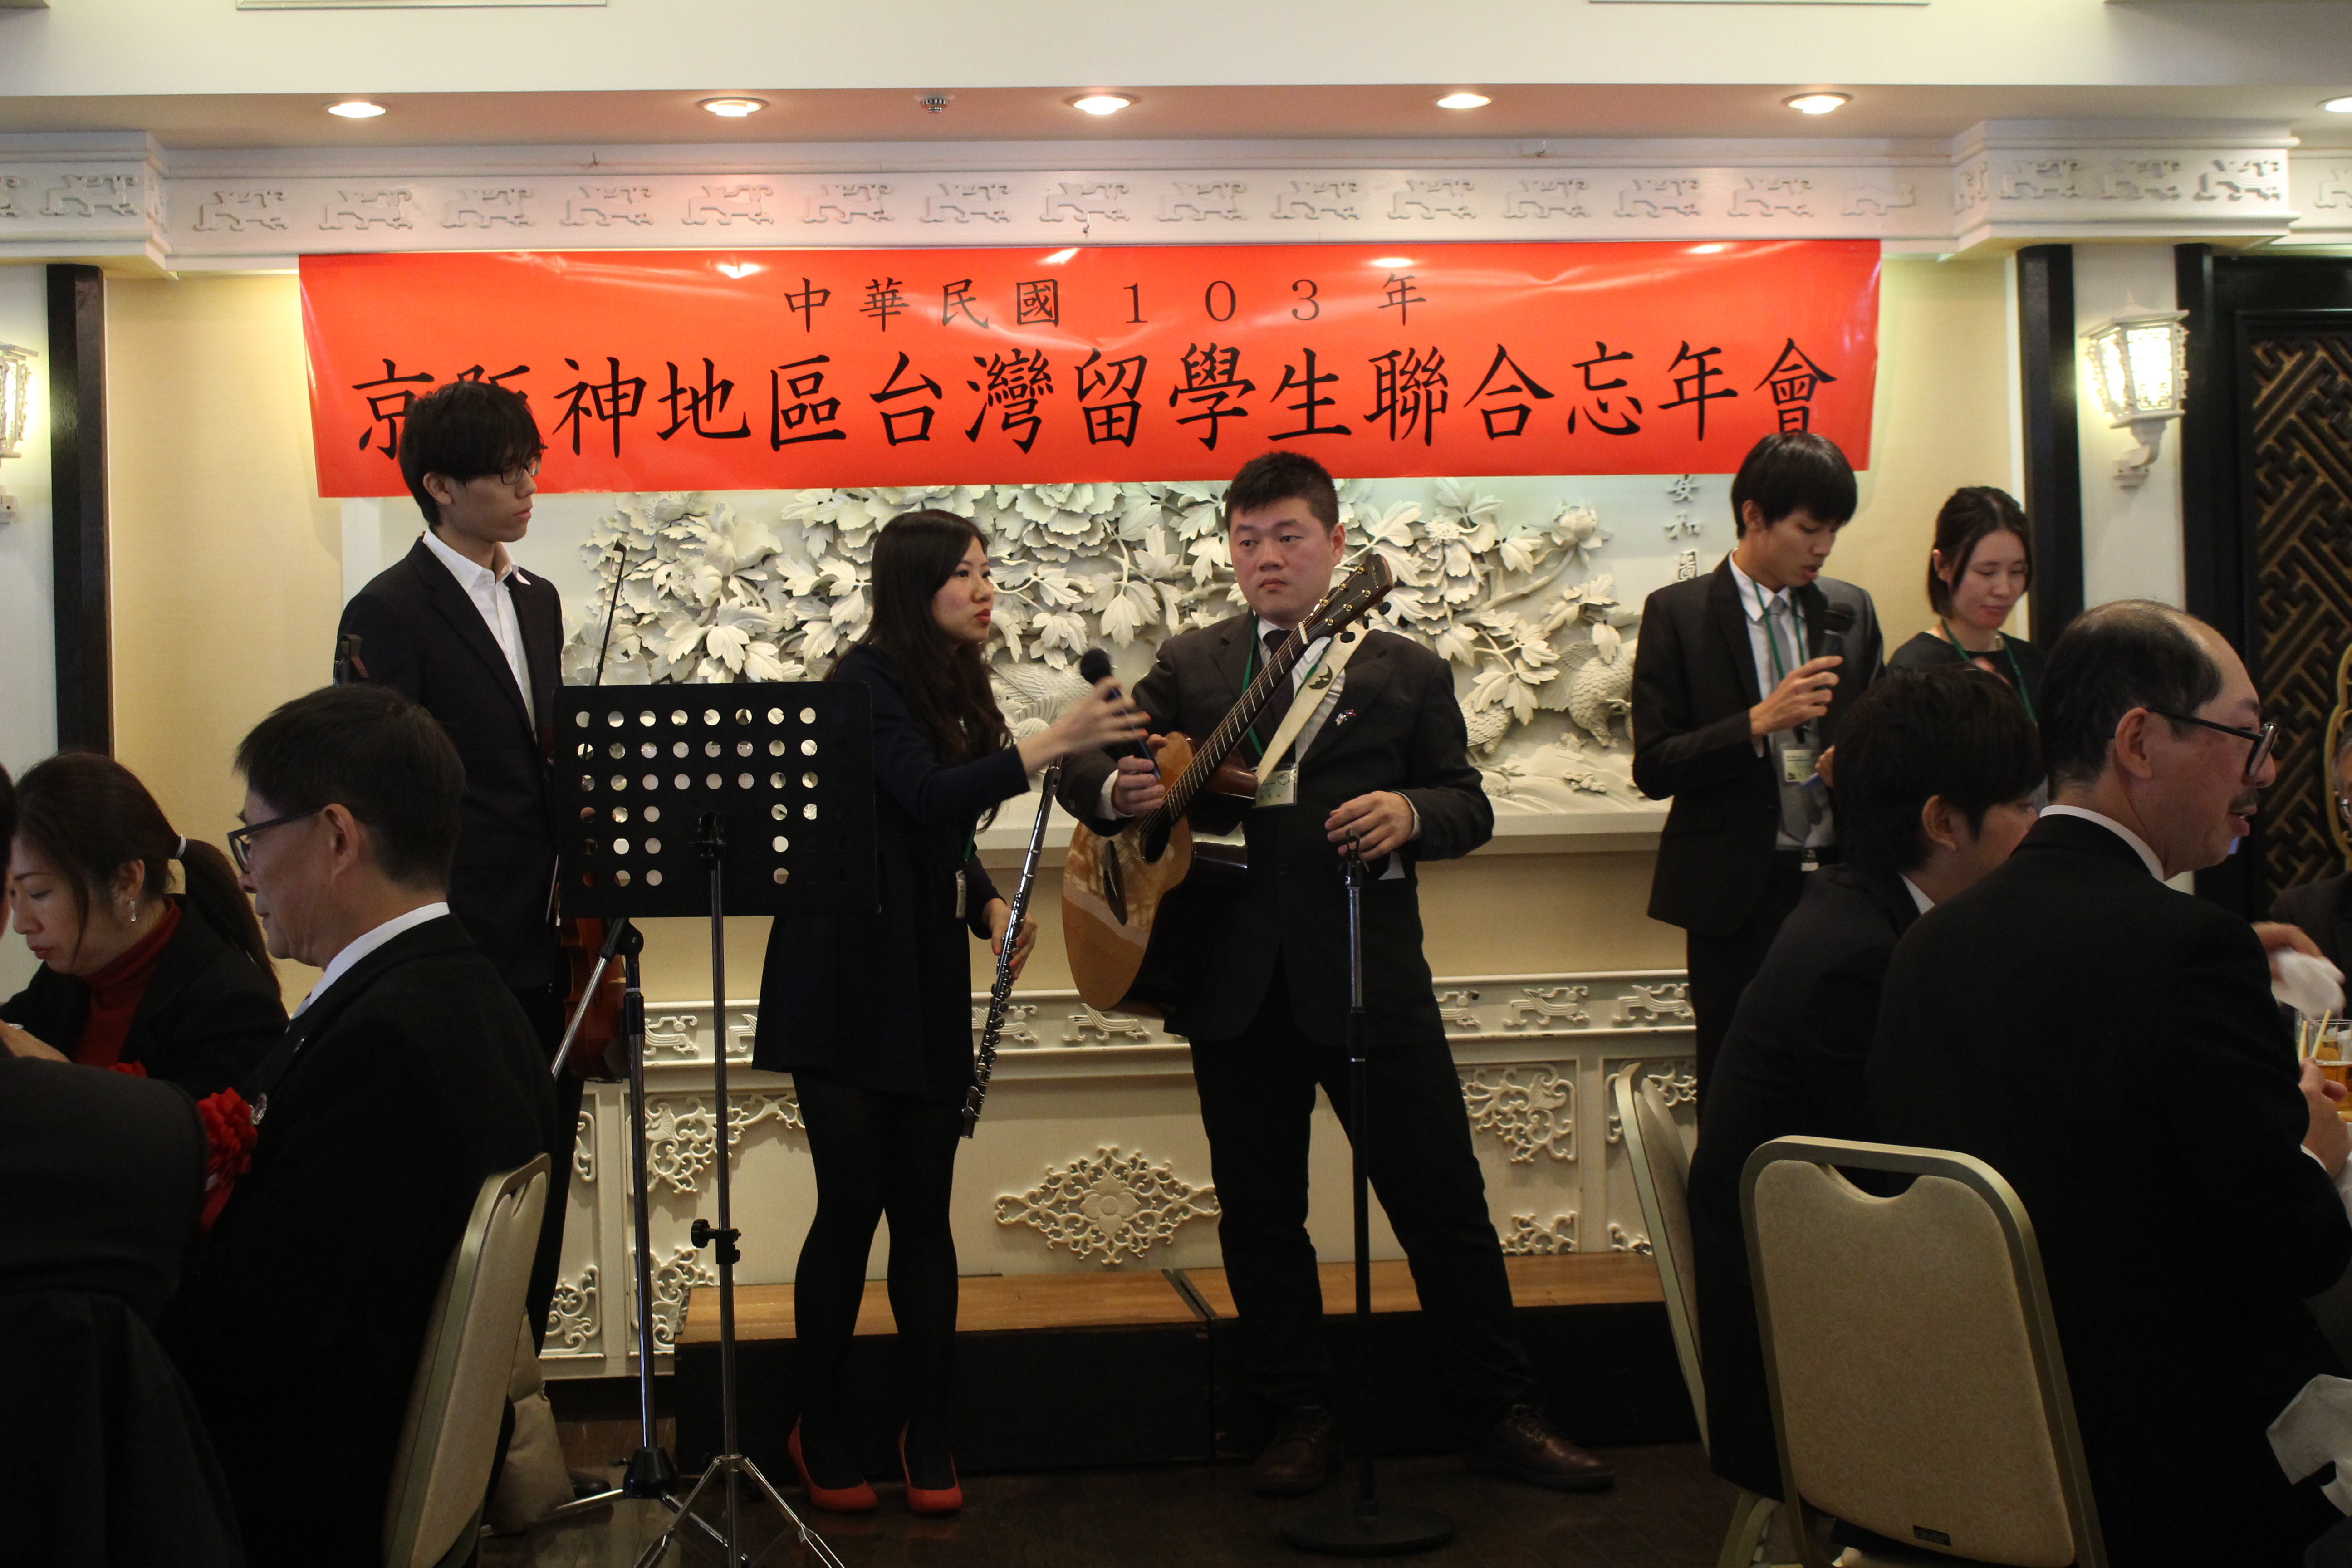 Taiwanese students in the Keihanshin region gather to celebrate New Year